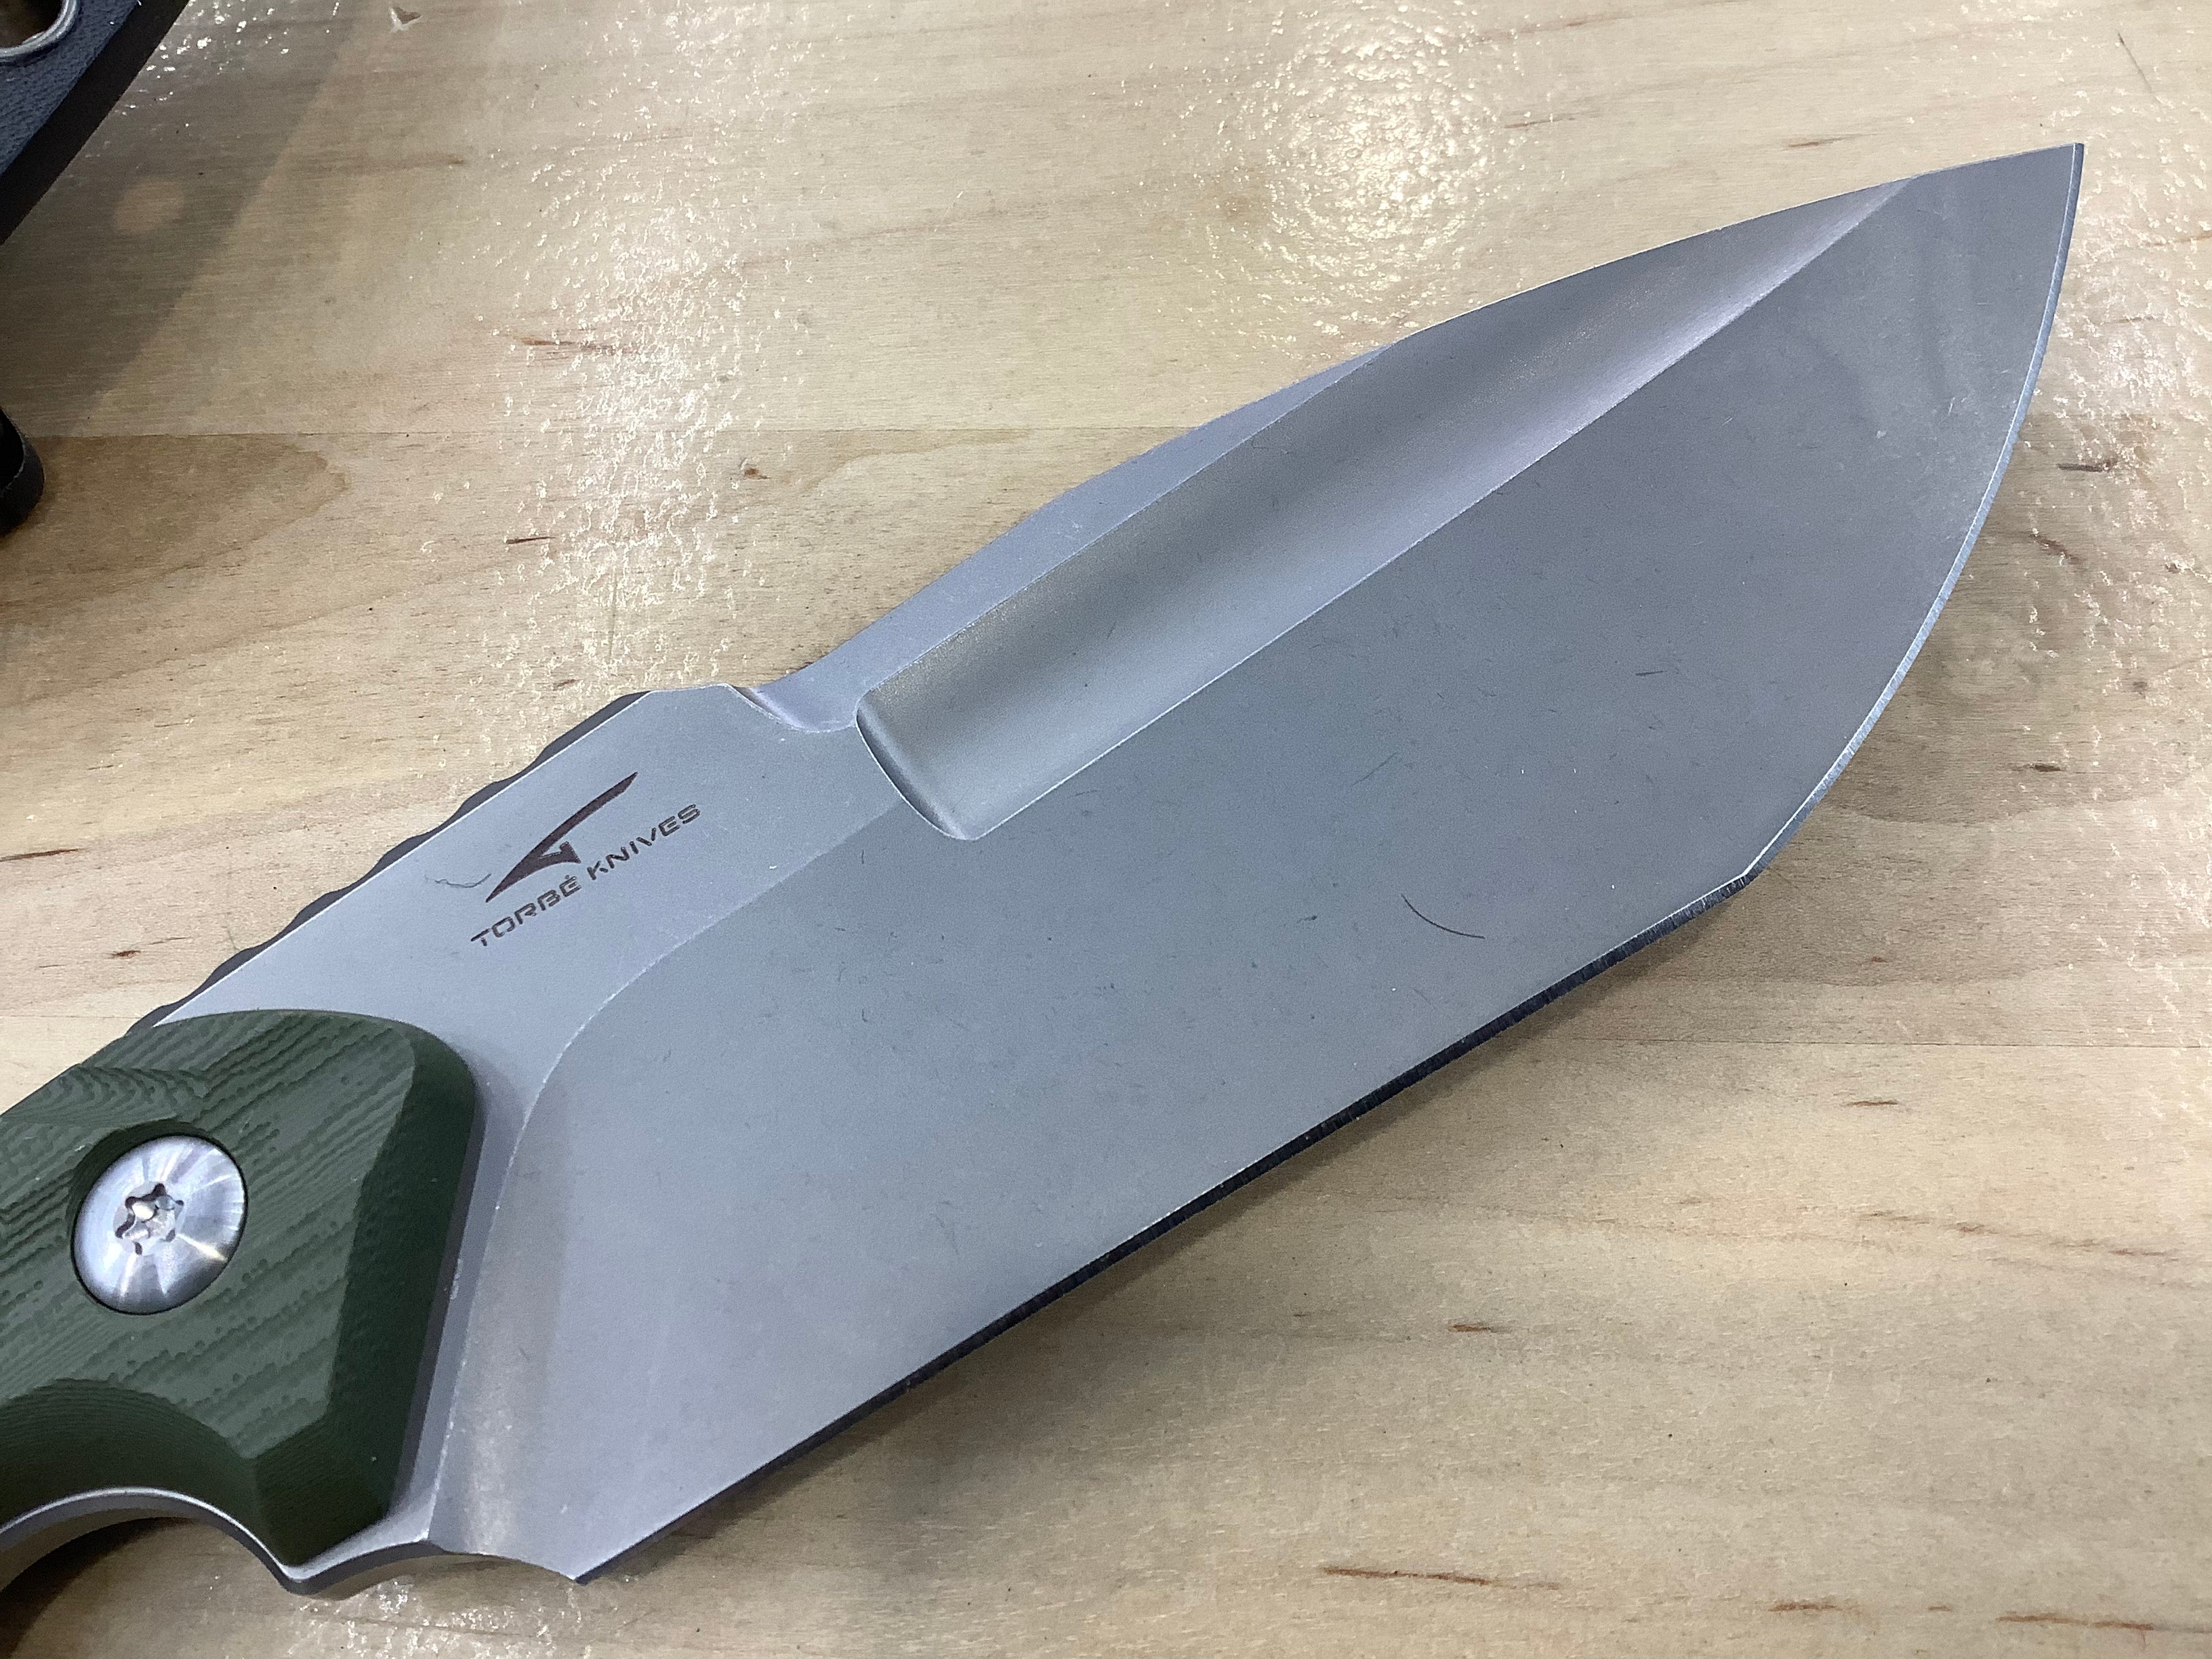 CIVIVI Maxwell Fixed Blade Knife OD Green G10 Handle (4.74" D2 Blade) C21040-2